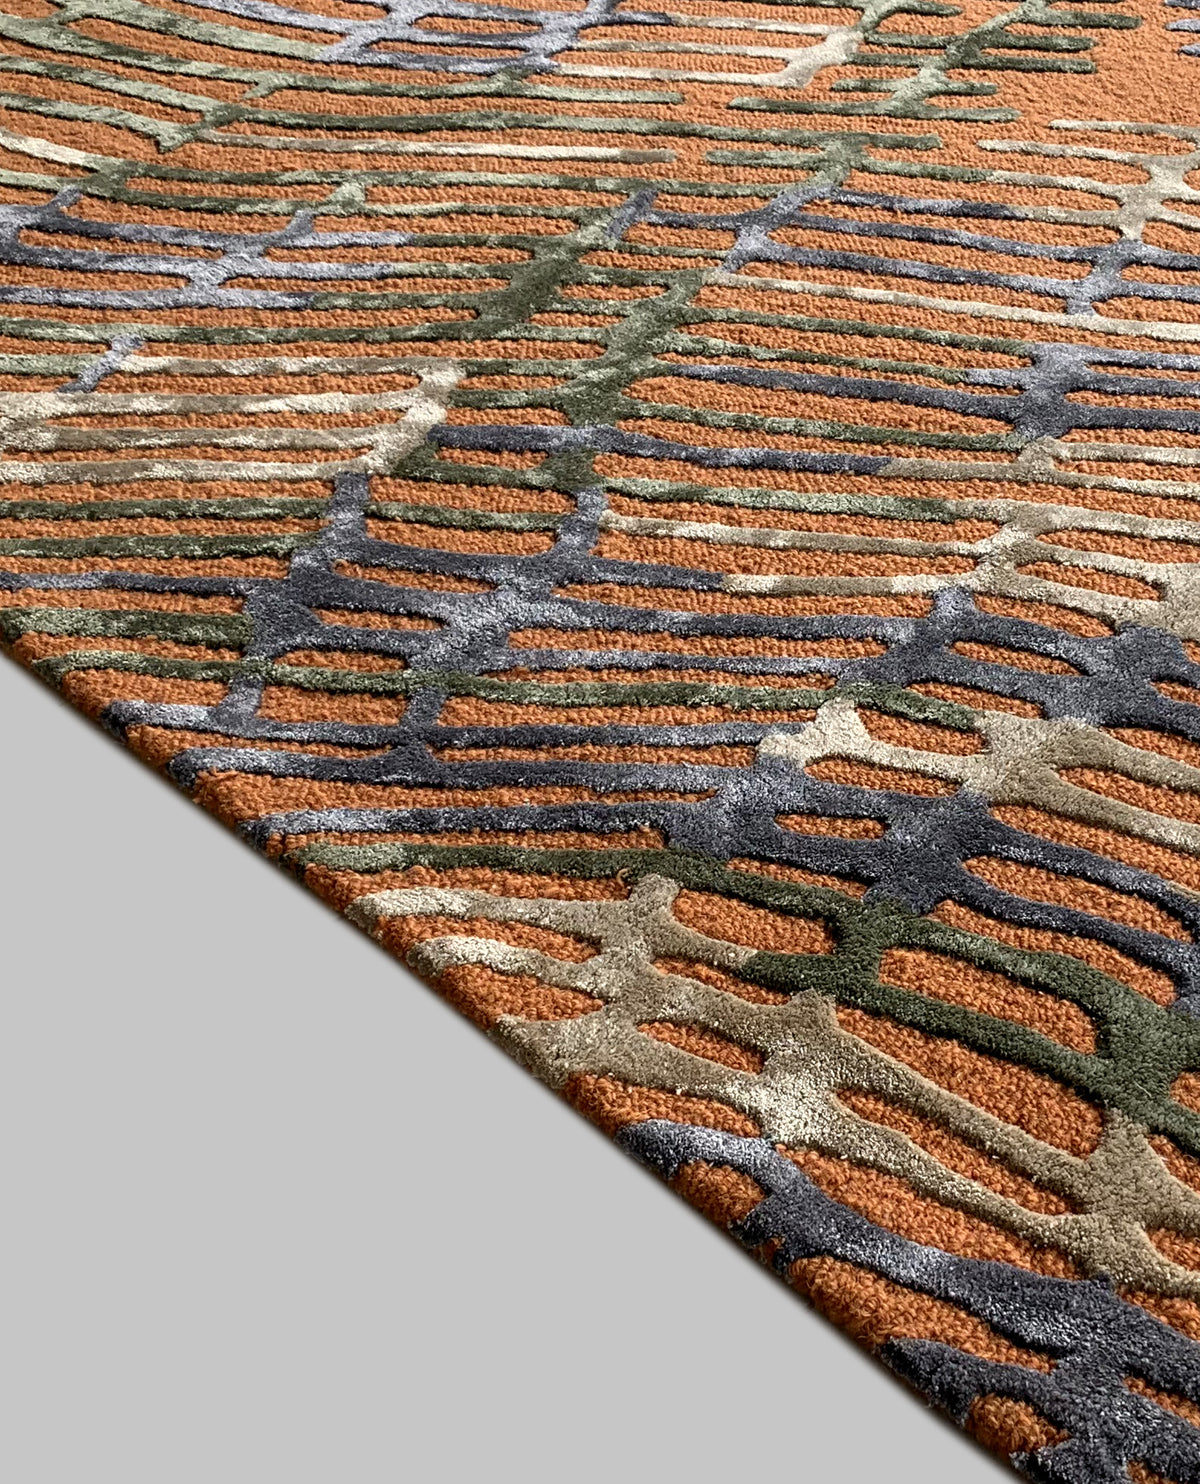 Rugslane Gold & Blue Color Modern Design High Quality Wool & Viscose Handmade Carpet 5ft X 7ft